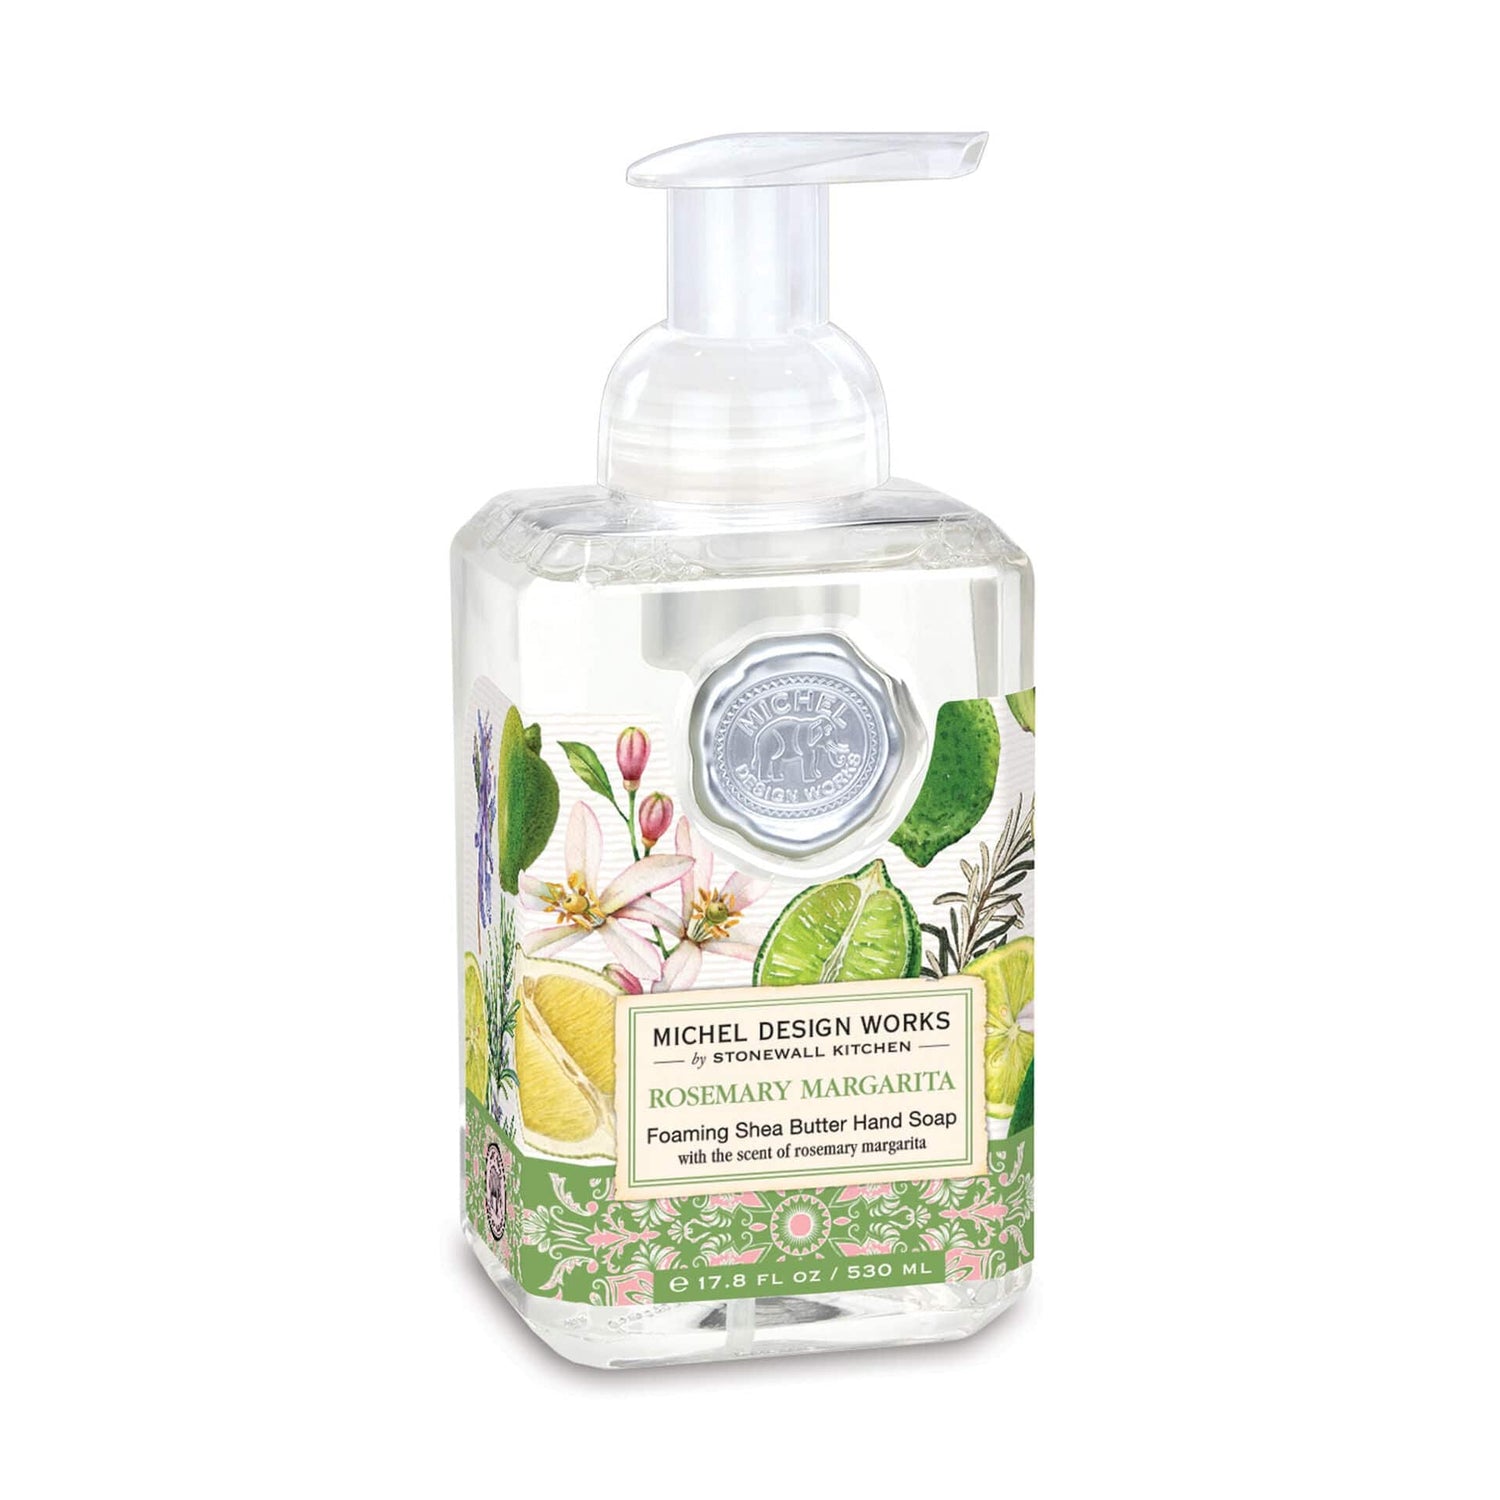 Rosemary Margarita Foaming Hand Soap, 17.8 oz. - Findlay Rowe Designs